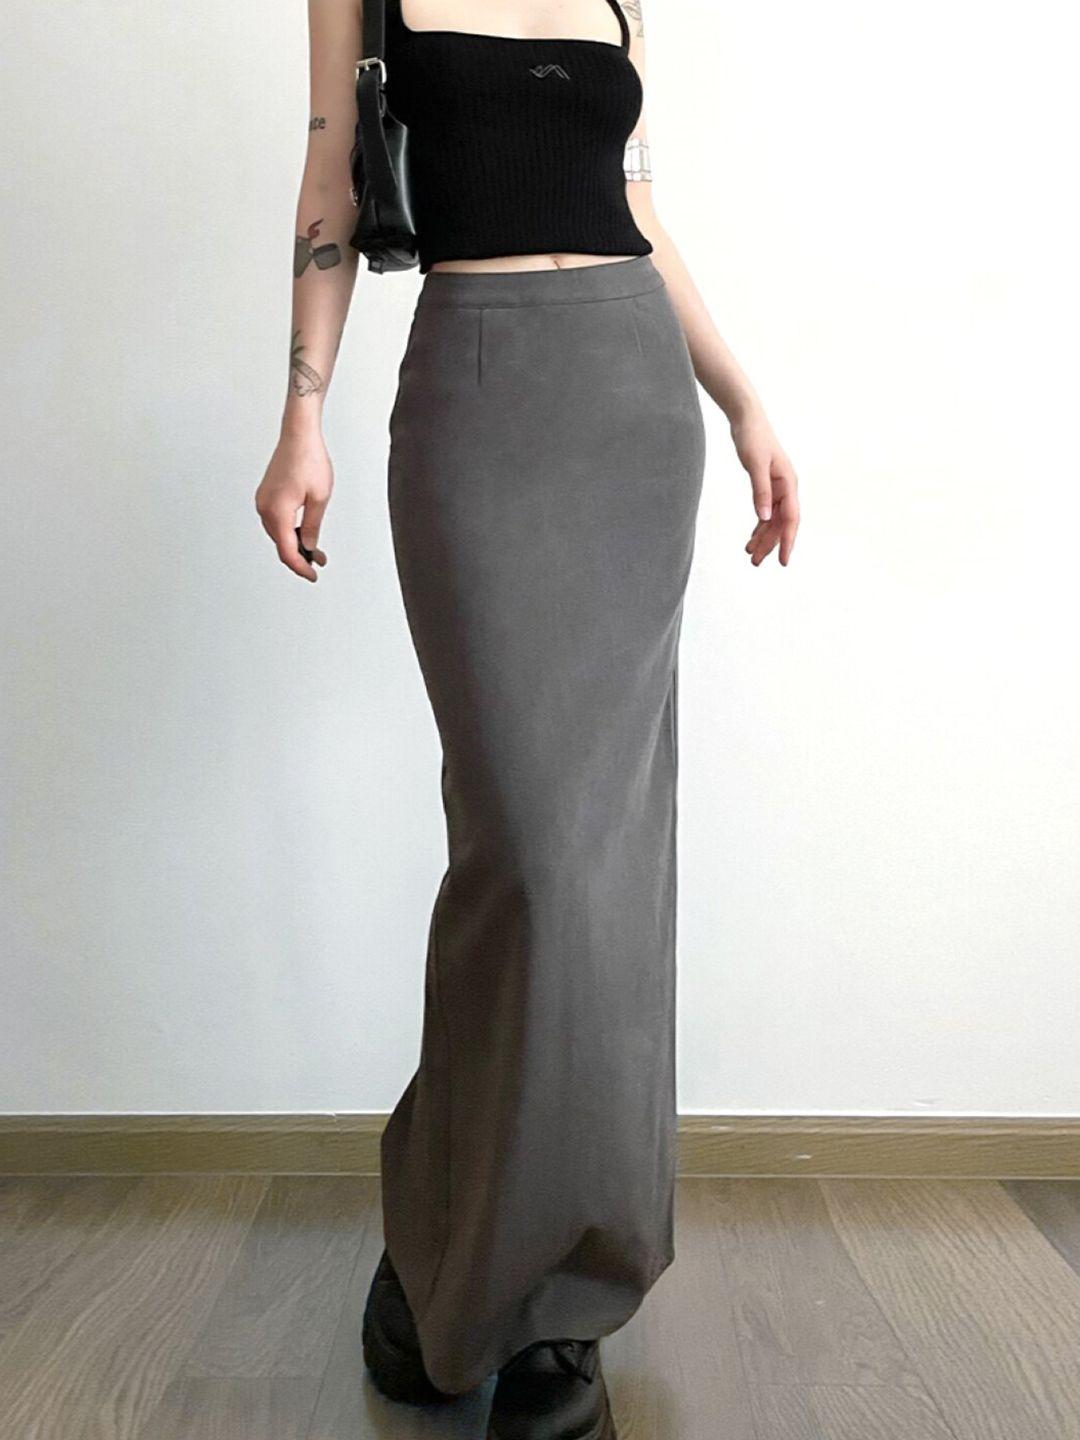 stylecast x kpop grey straight maxi skirt